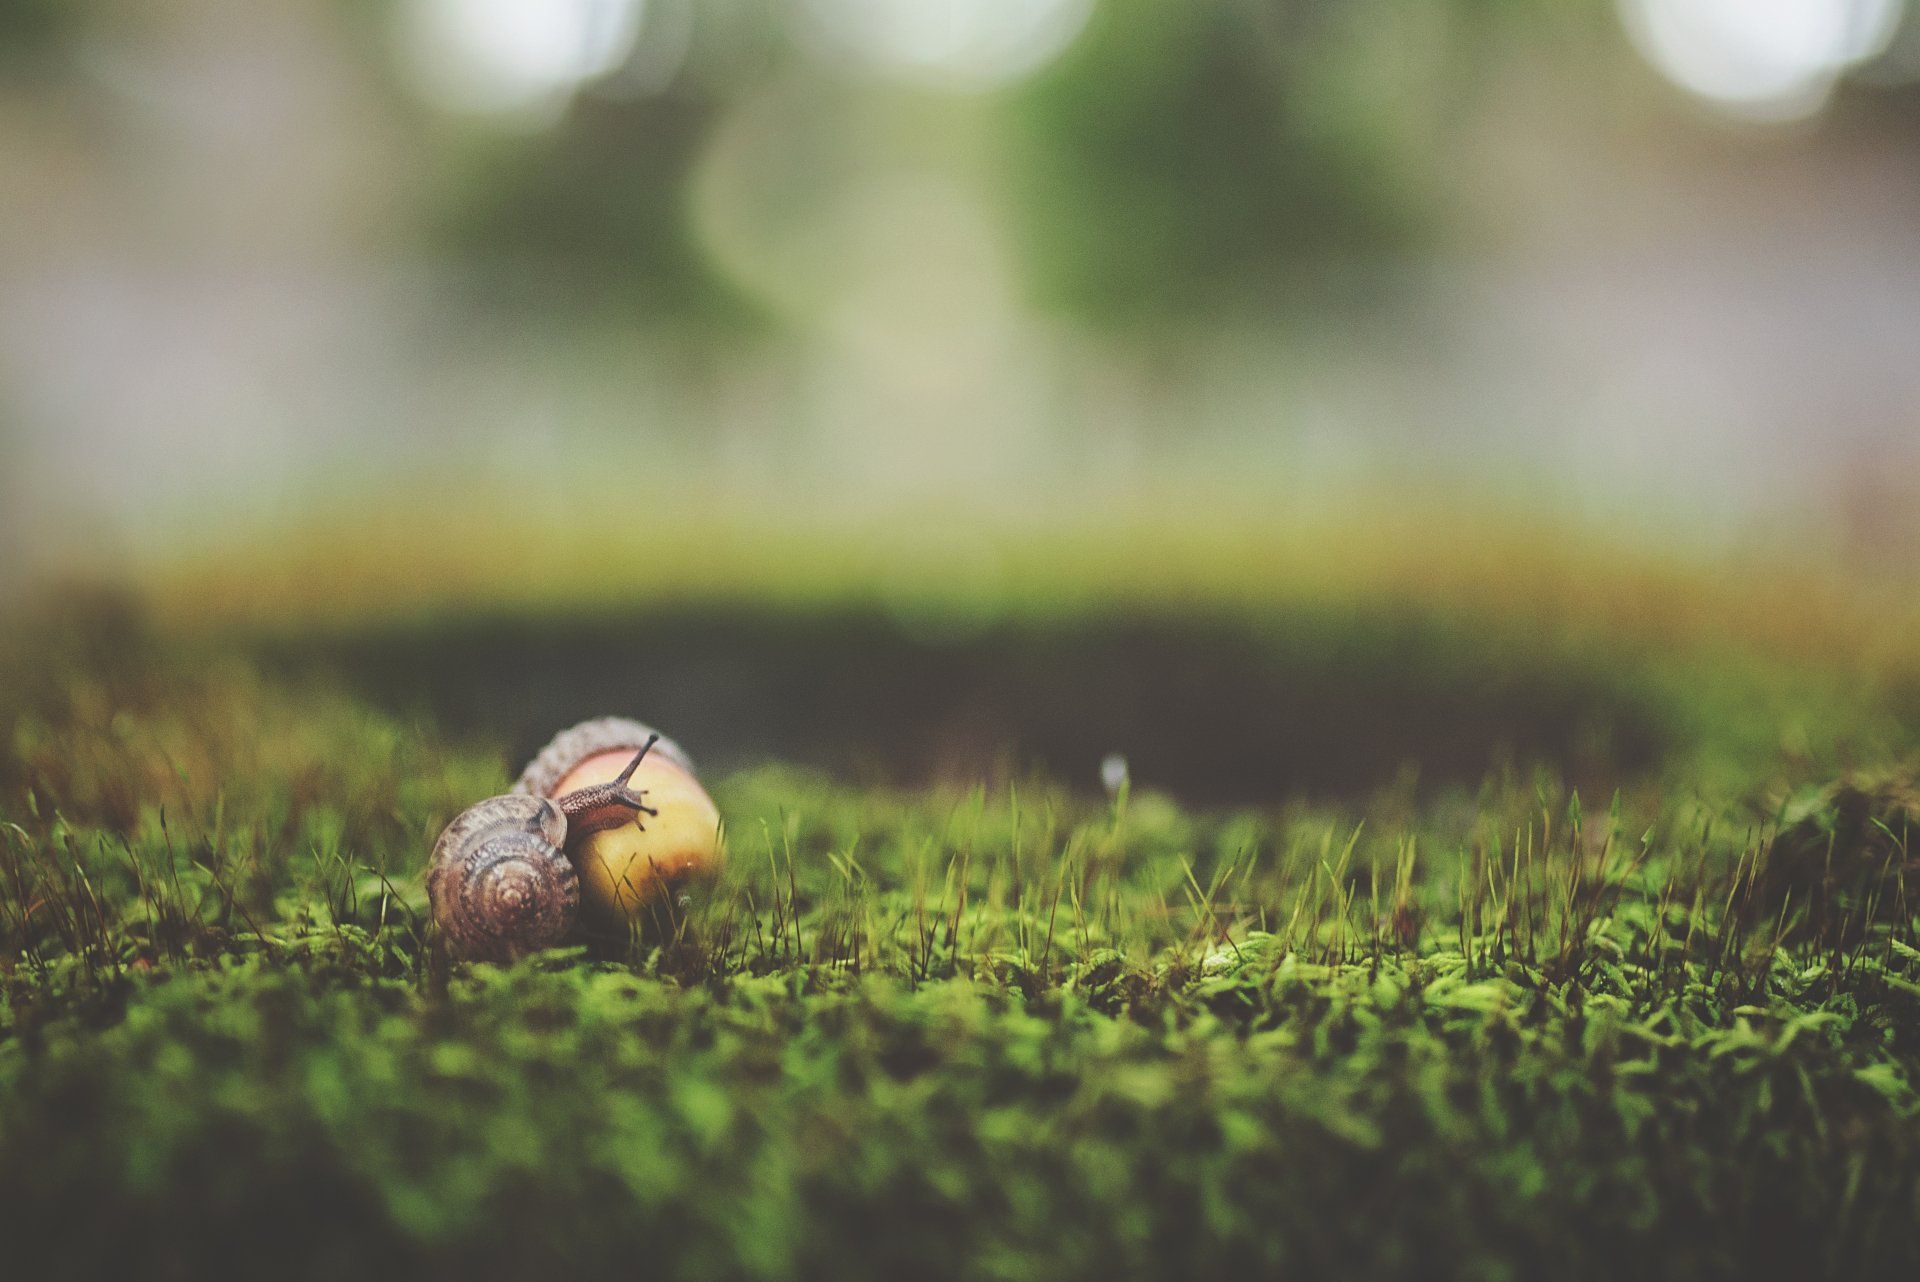 acorn on the grass